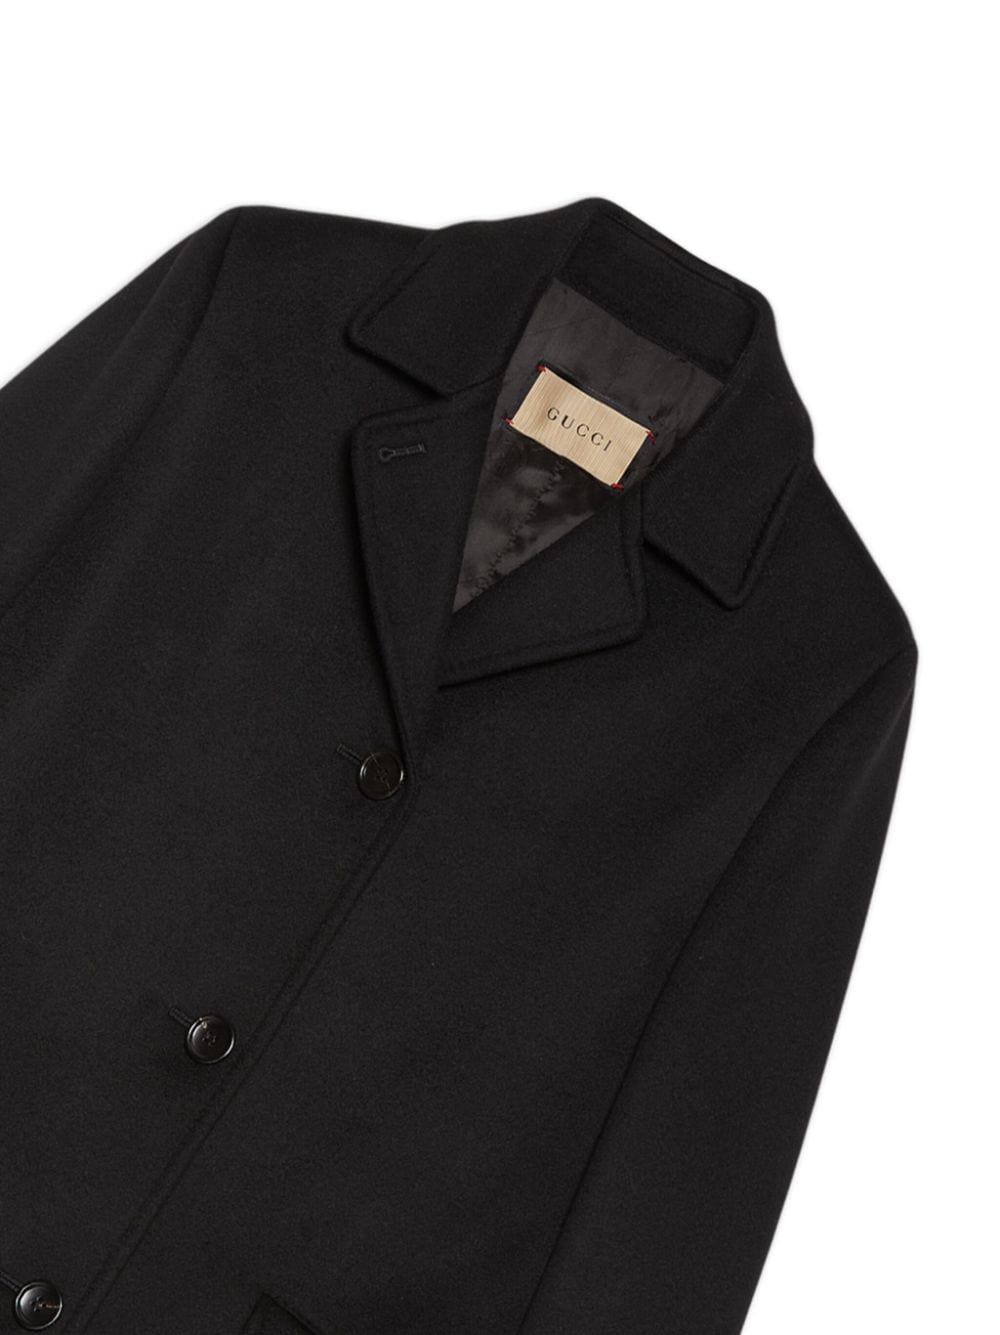 Luxury Black Wool Jacket for Women - Must-Have Winter Wardrobe Essential!